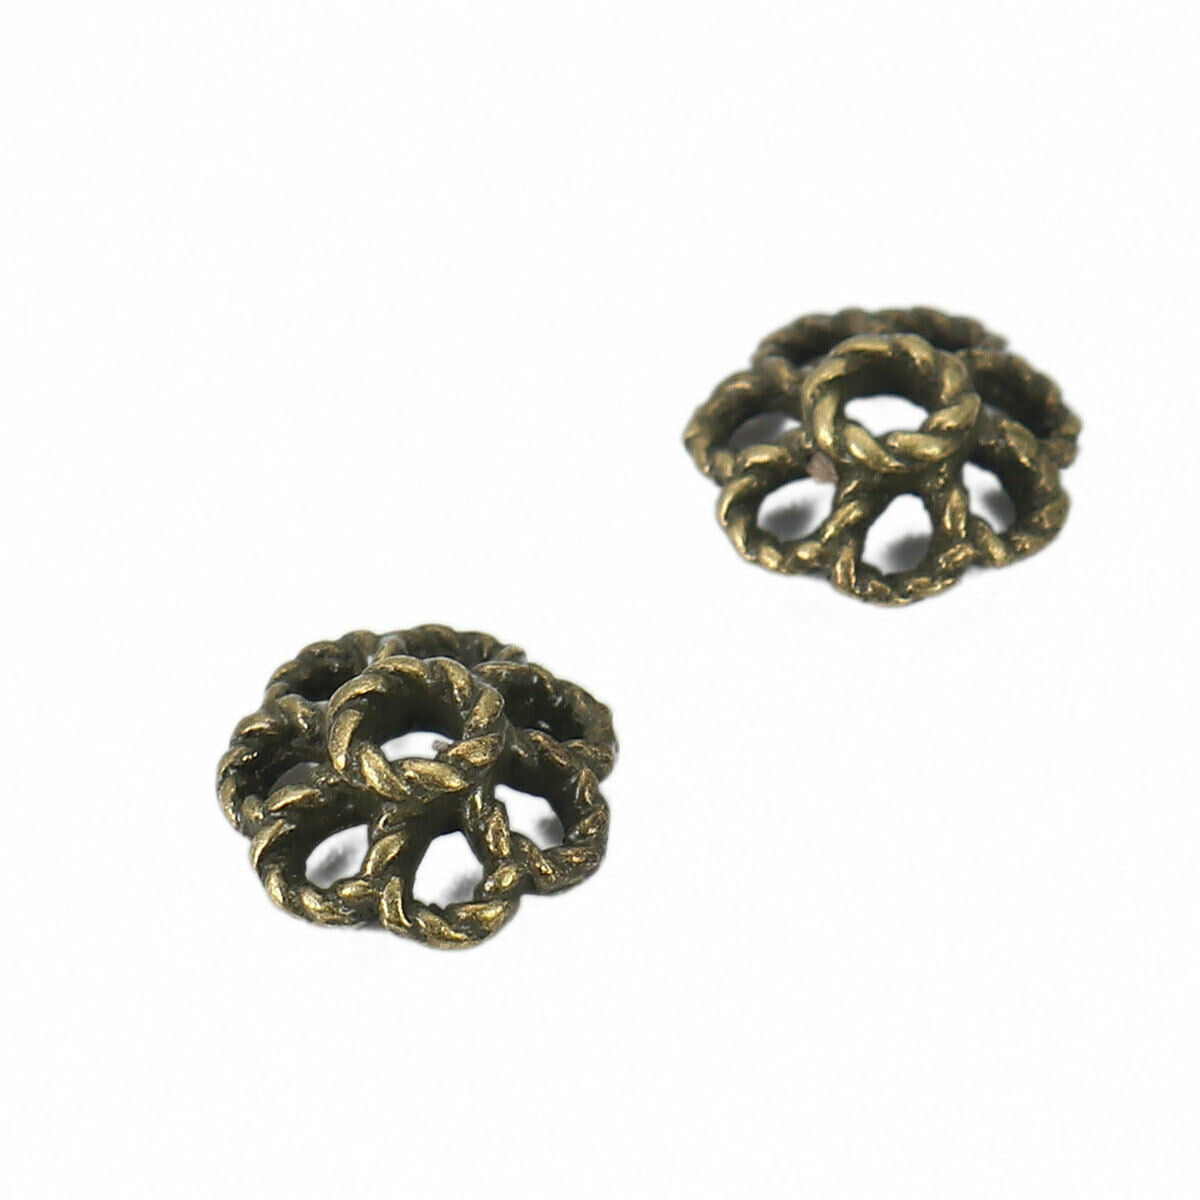 10 Beads Caps Flower Antique Bronze (Fits 8mm Beads) 8 x 8mm